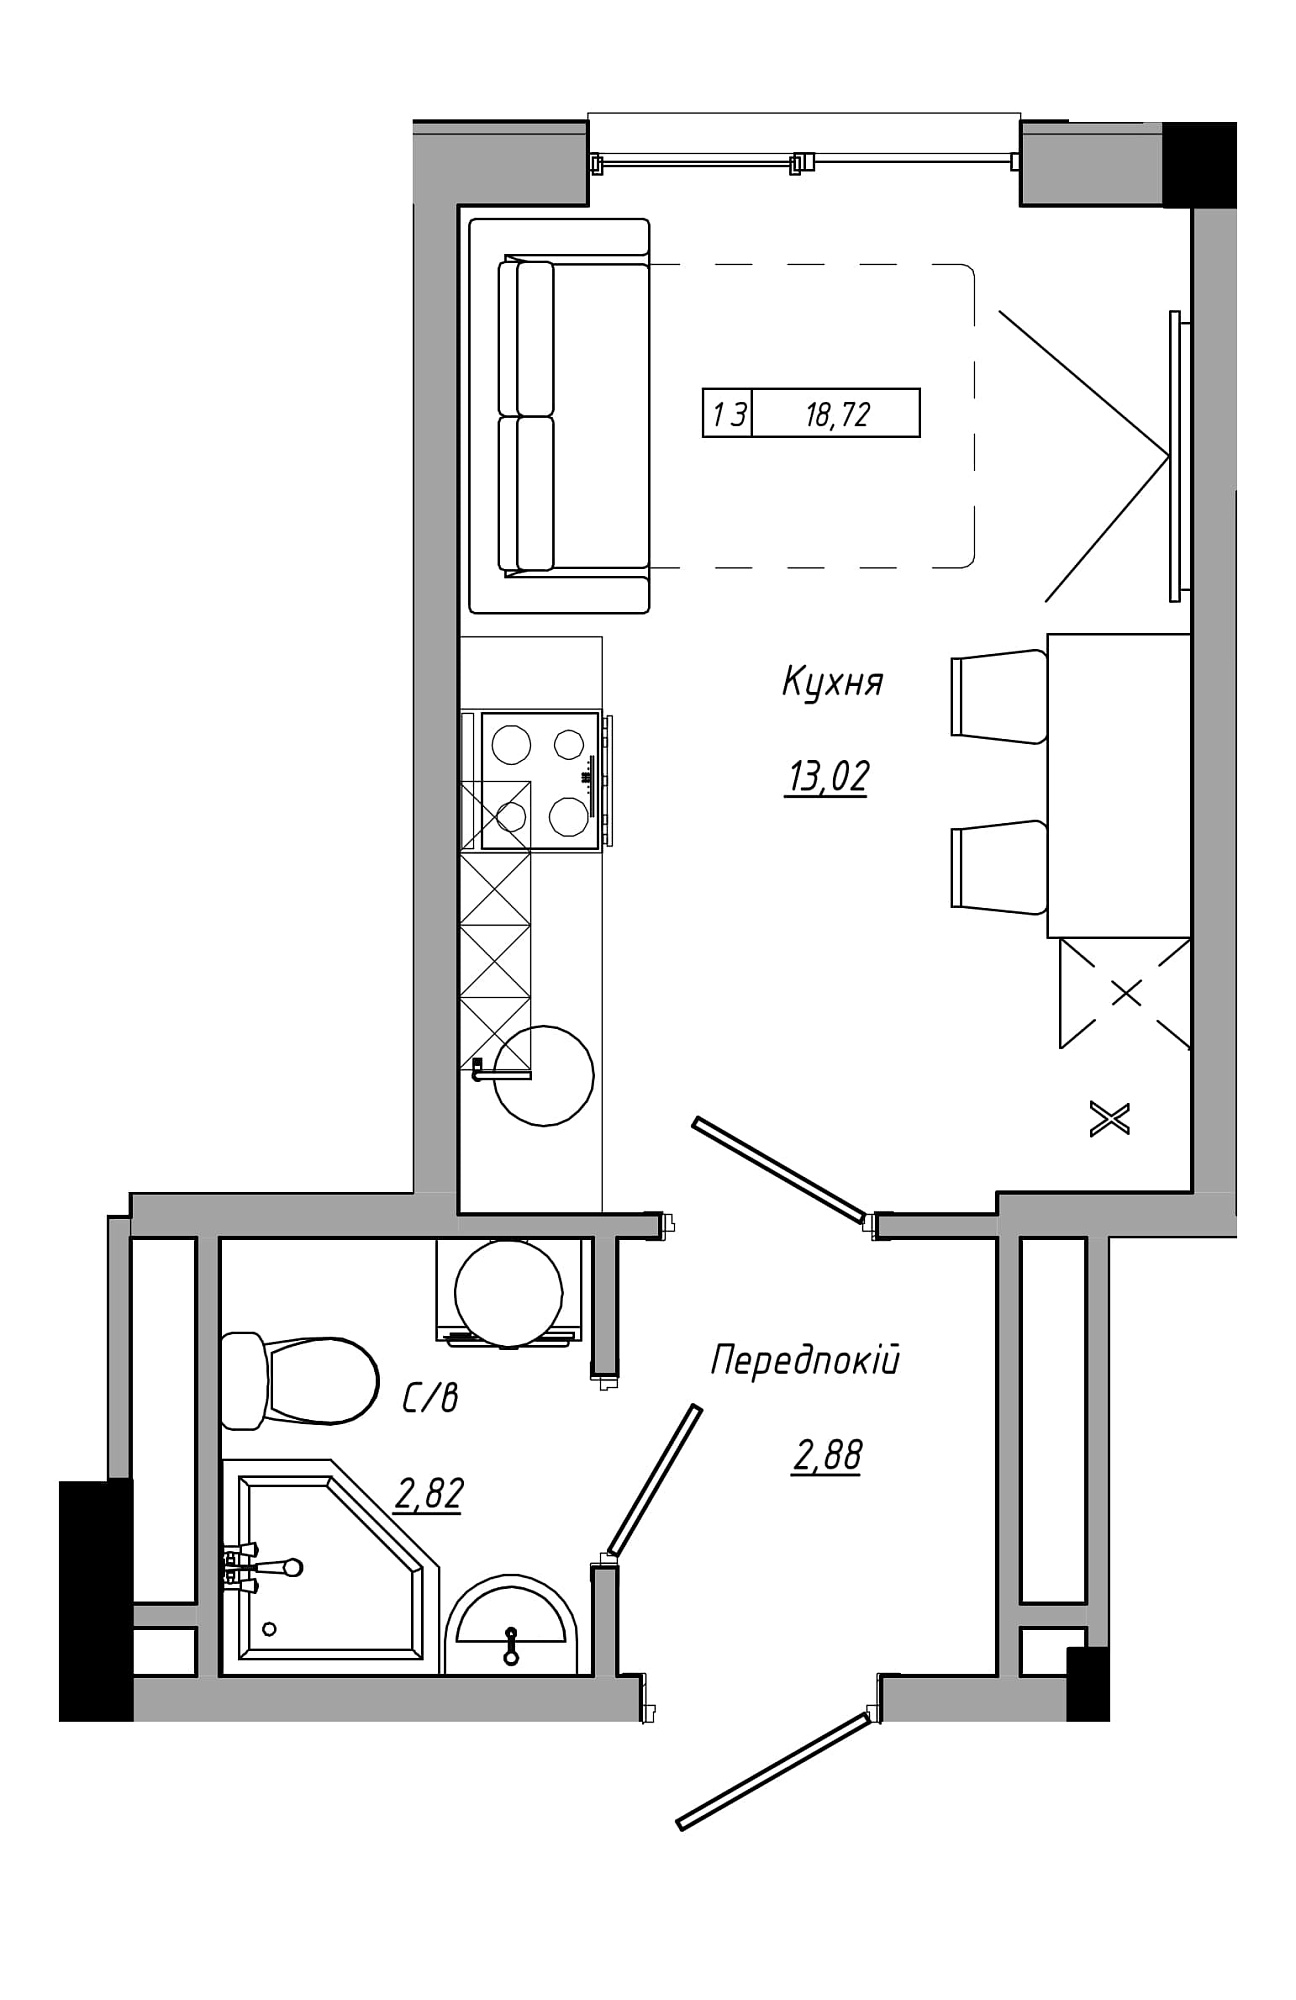 Planning Smart flats area 18.72m2, AB-21-11/00011.